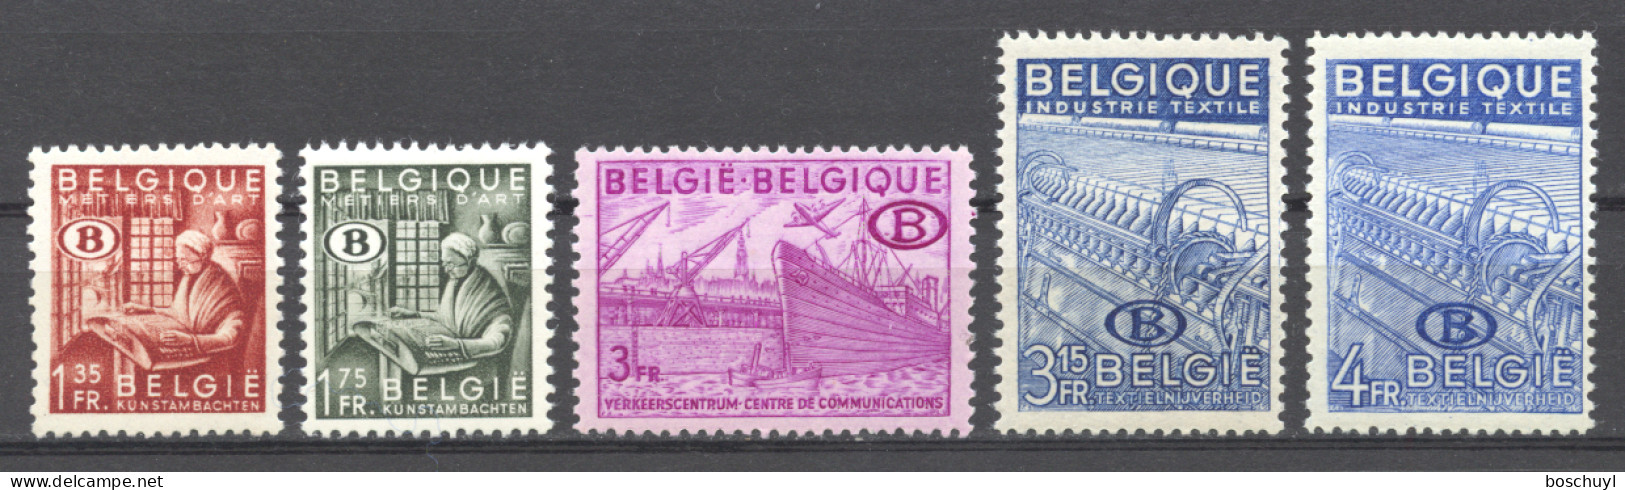 Belgium, 1948-1949, Service Stamps, Export Promotion, MNH, Michel 42-46 - Nuevos